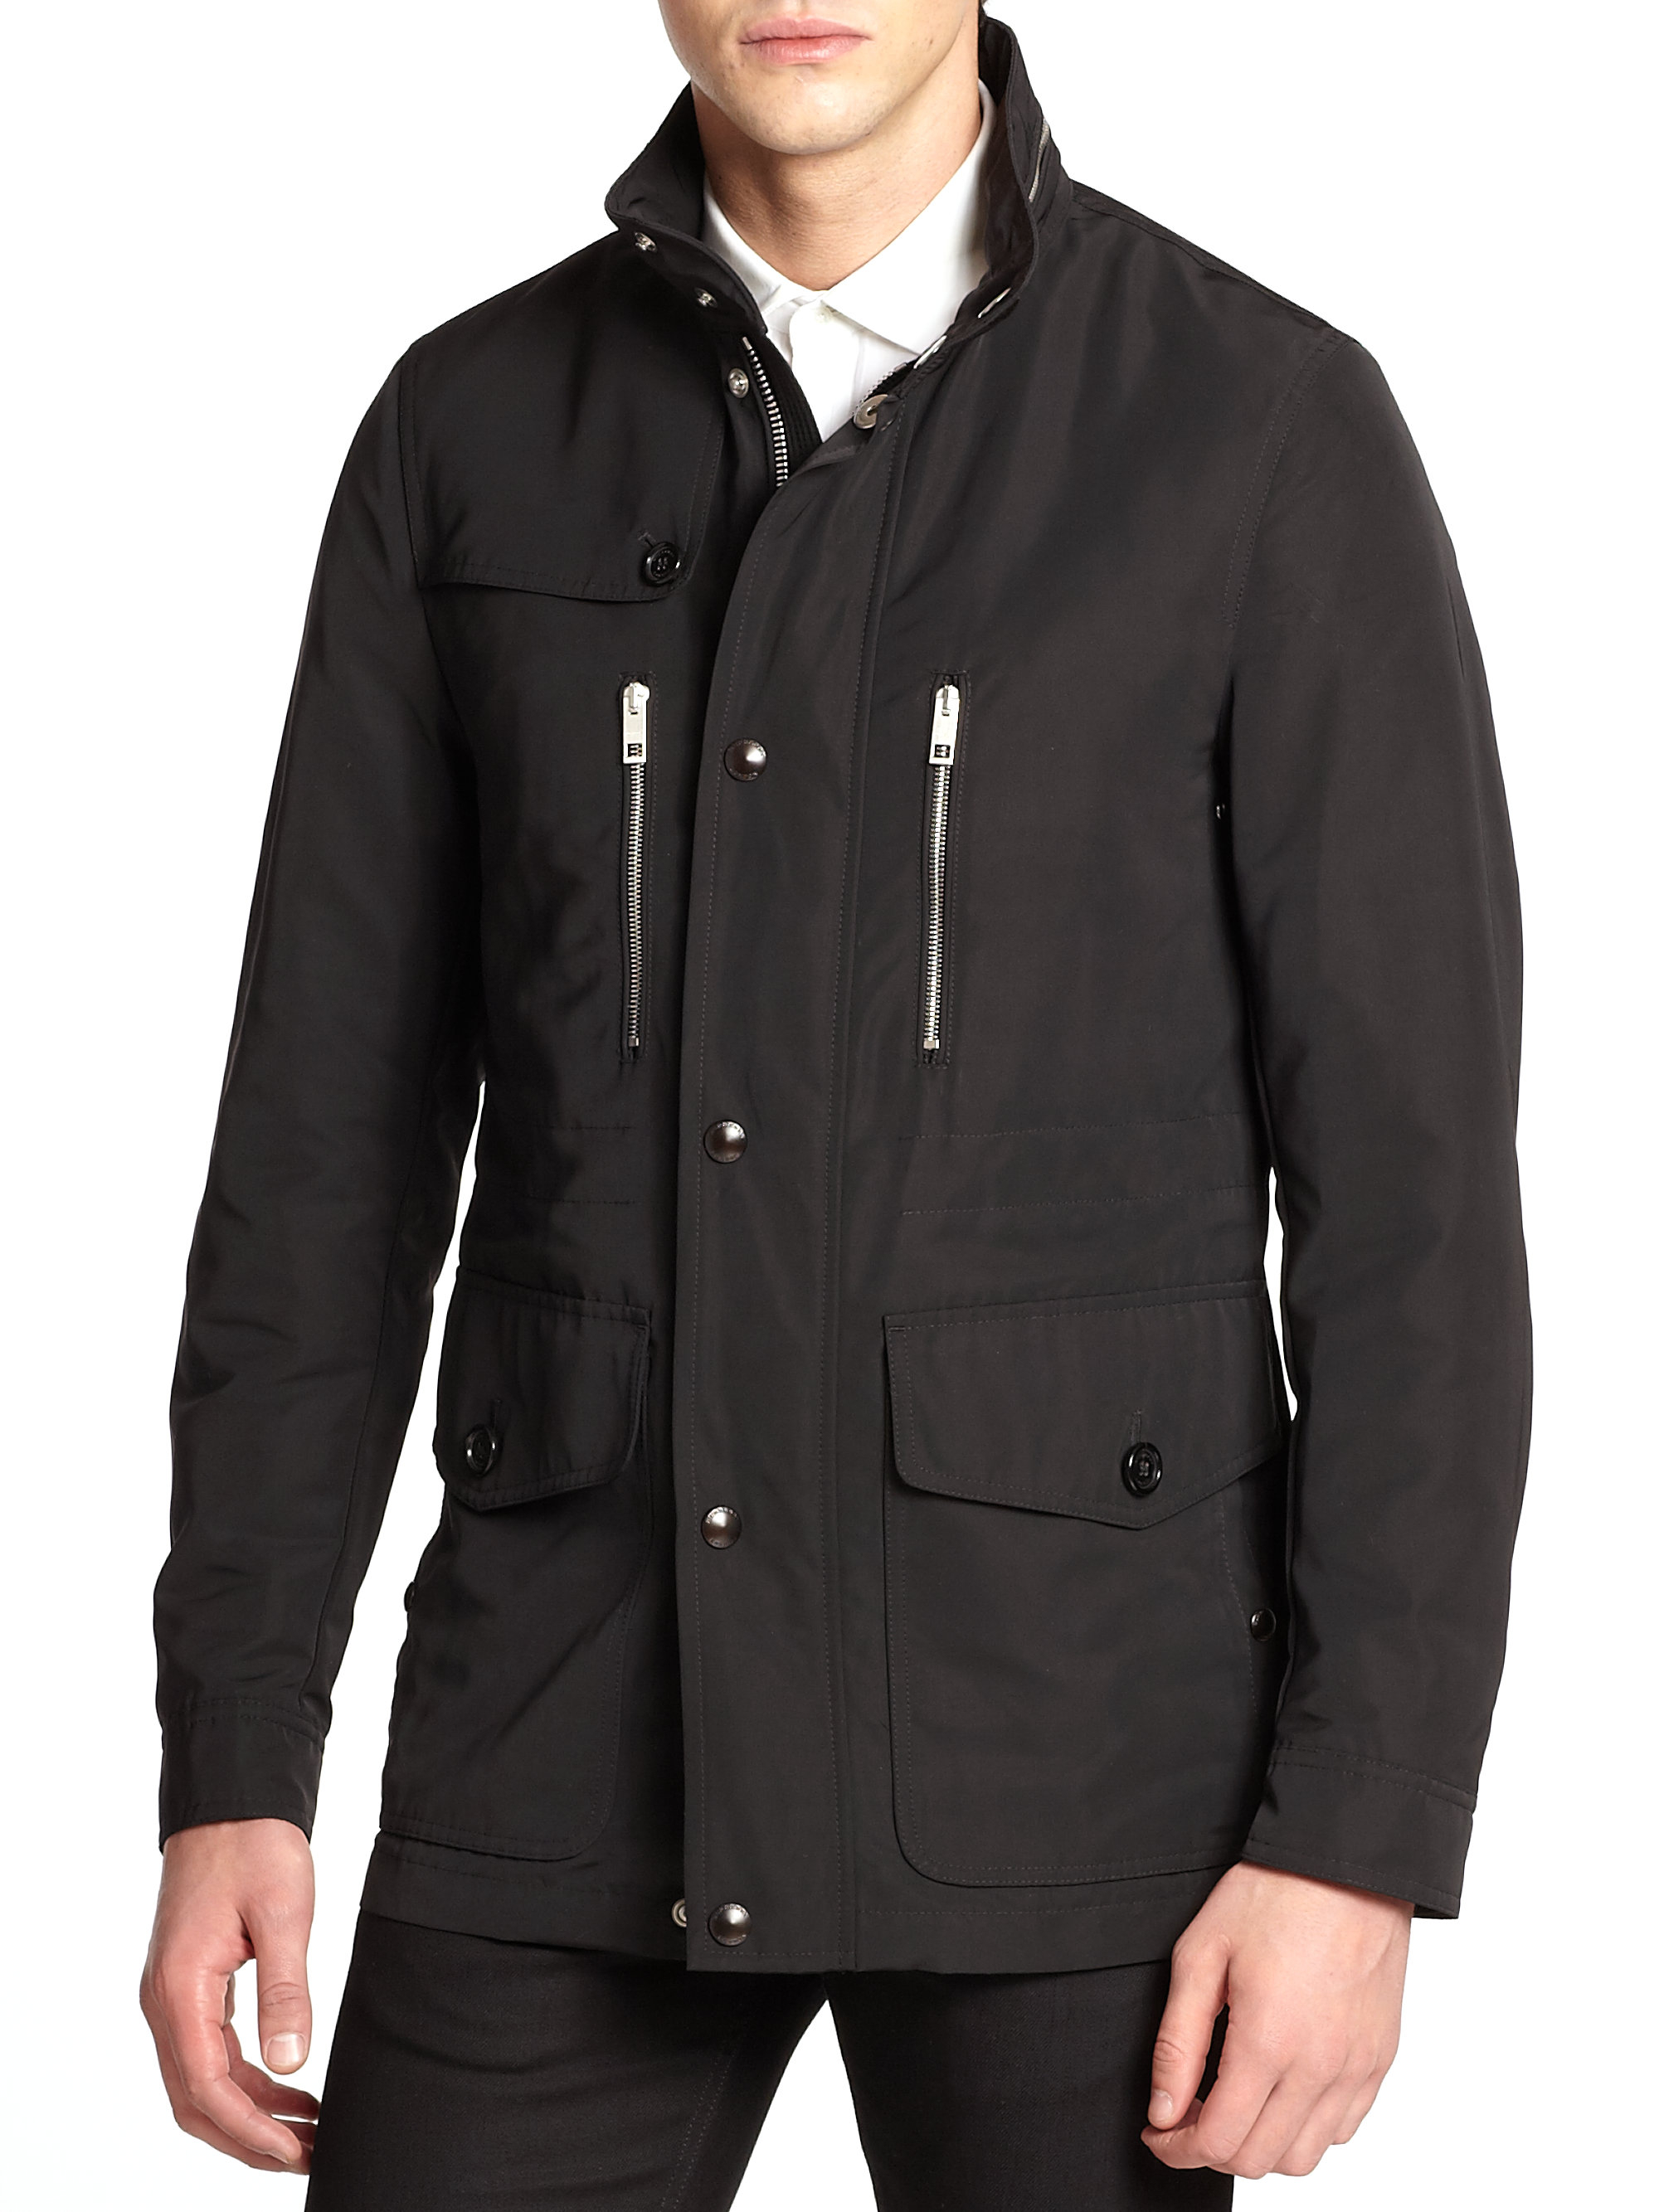 Burberry Kinstone Nylon Field Jacket in Black for Men - Lyst